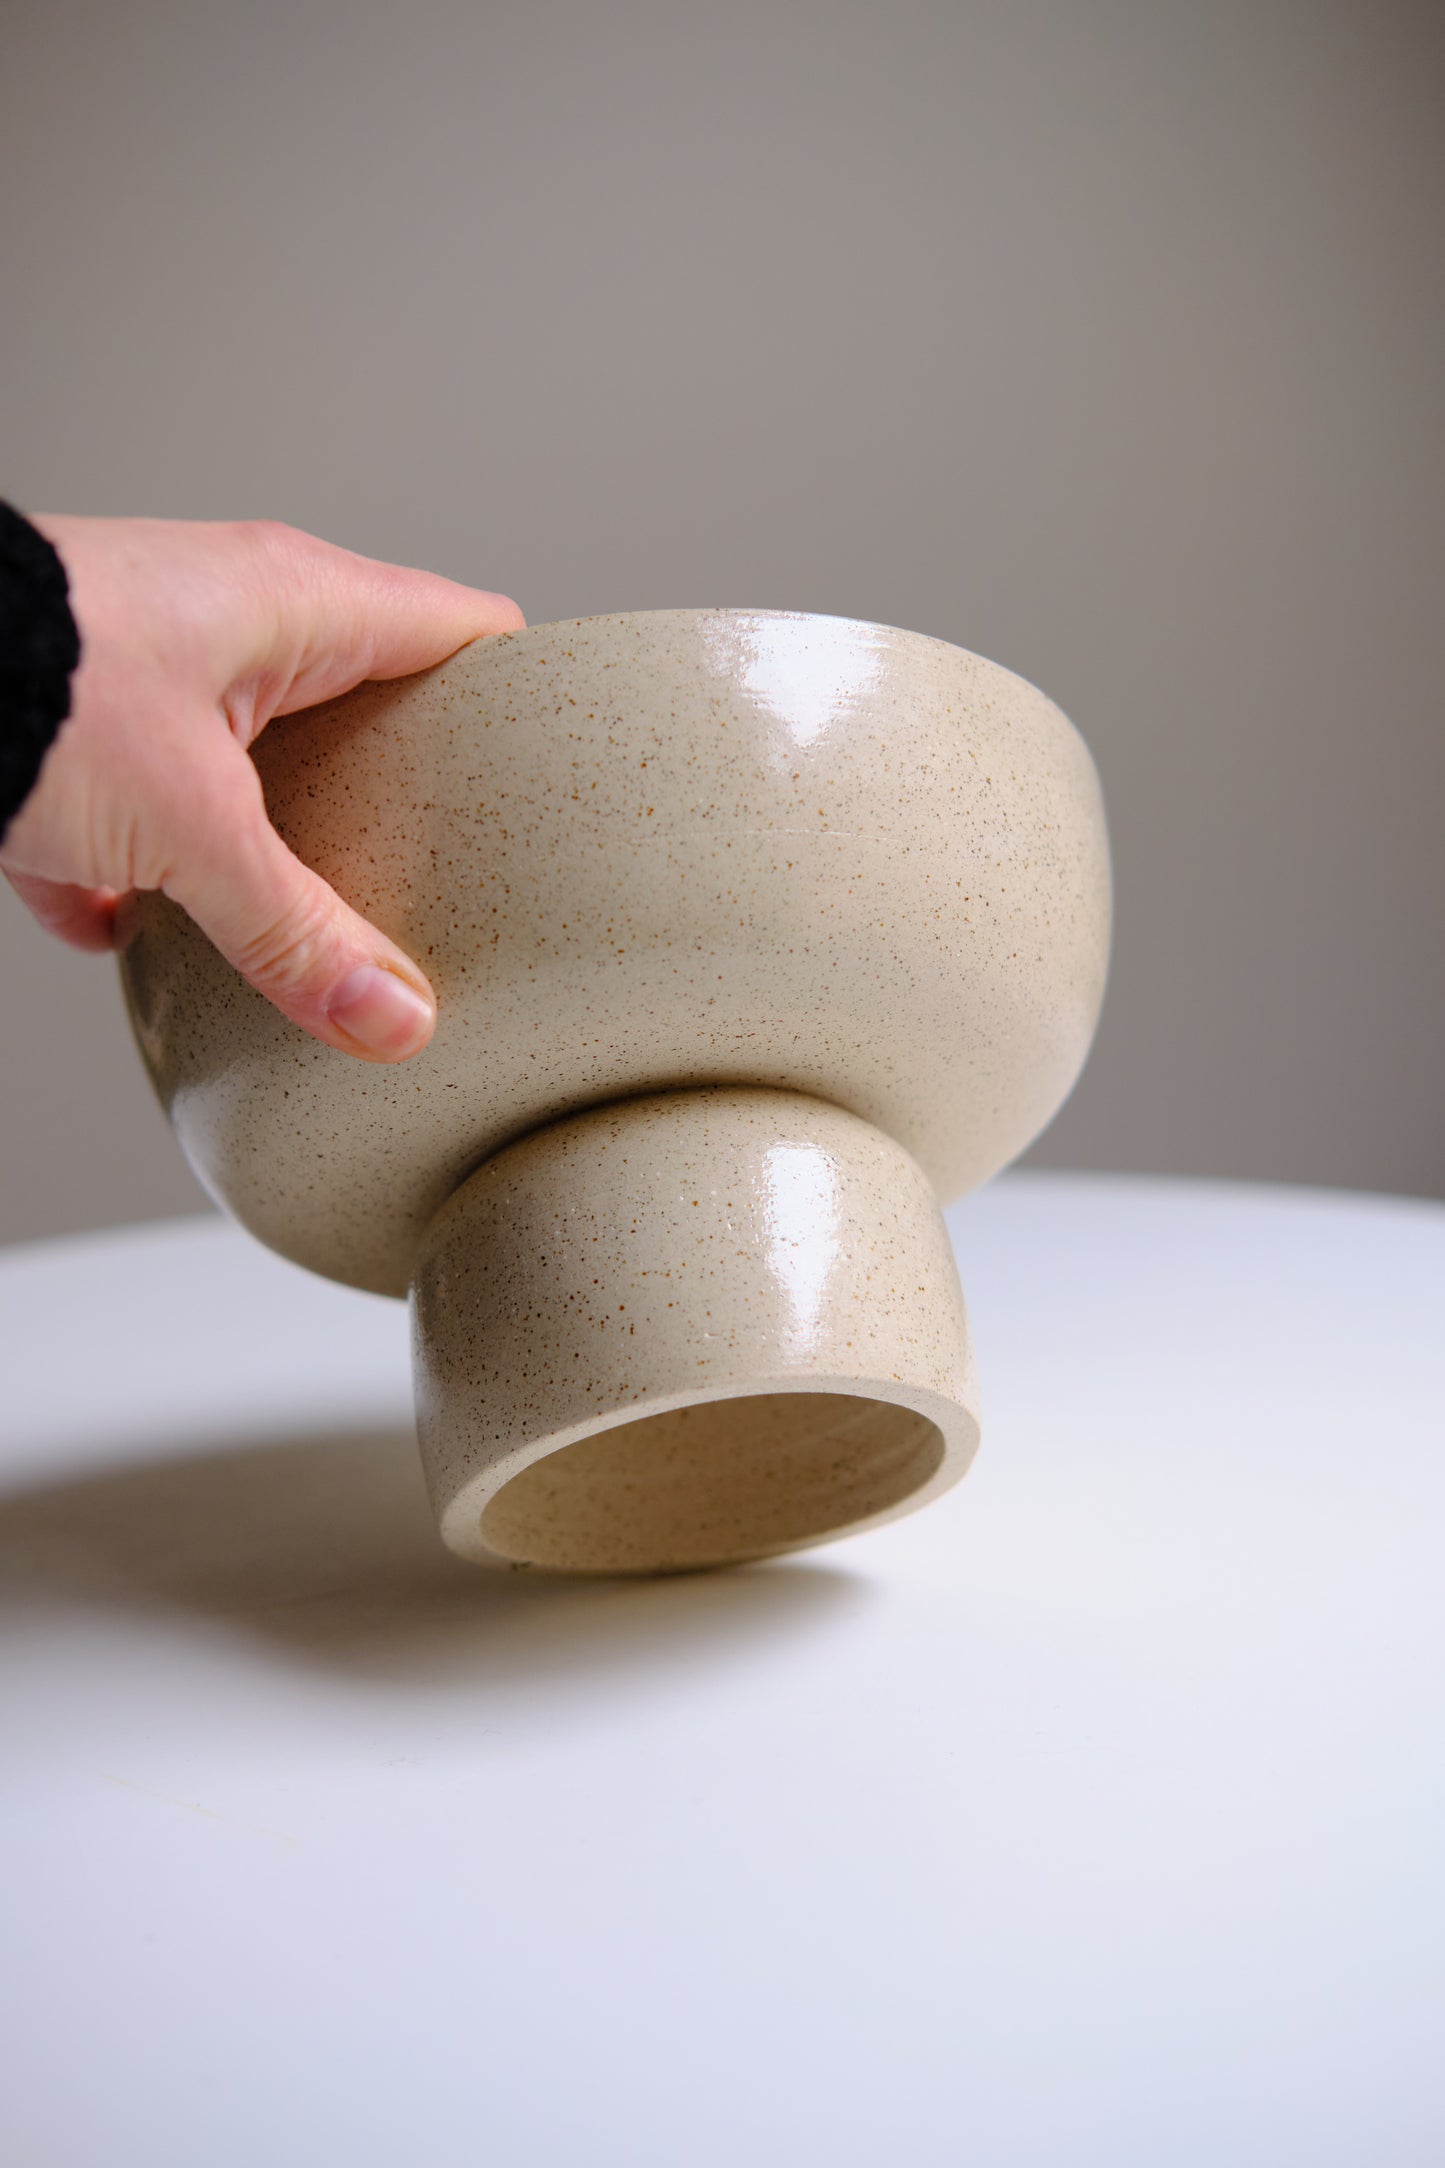 Pedestal bowl no. 27